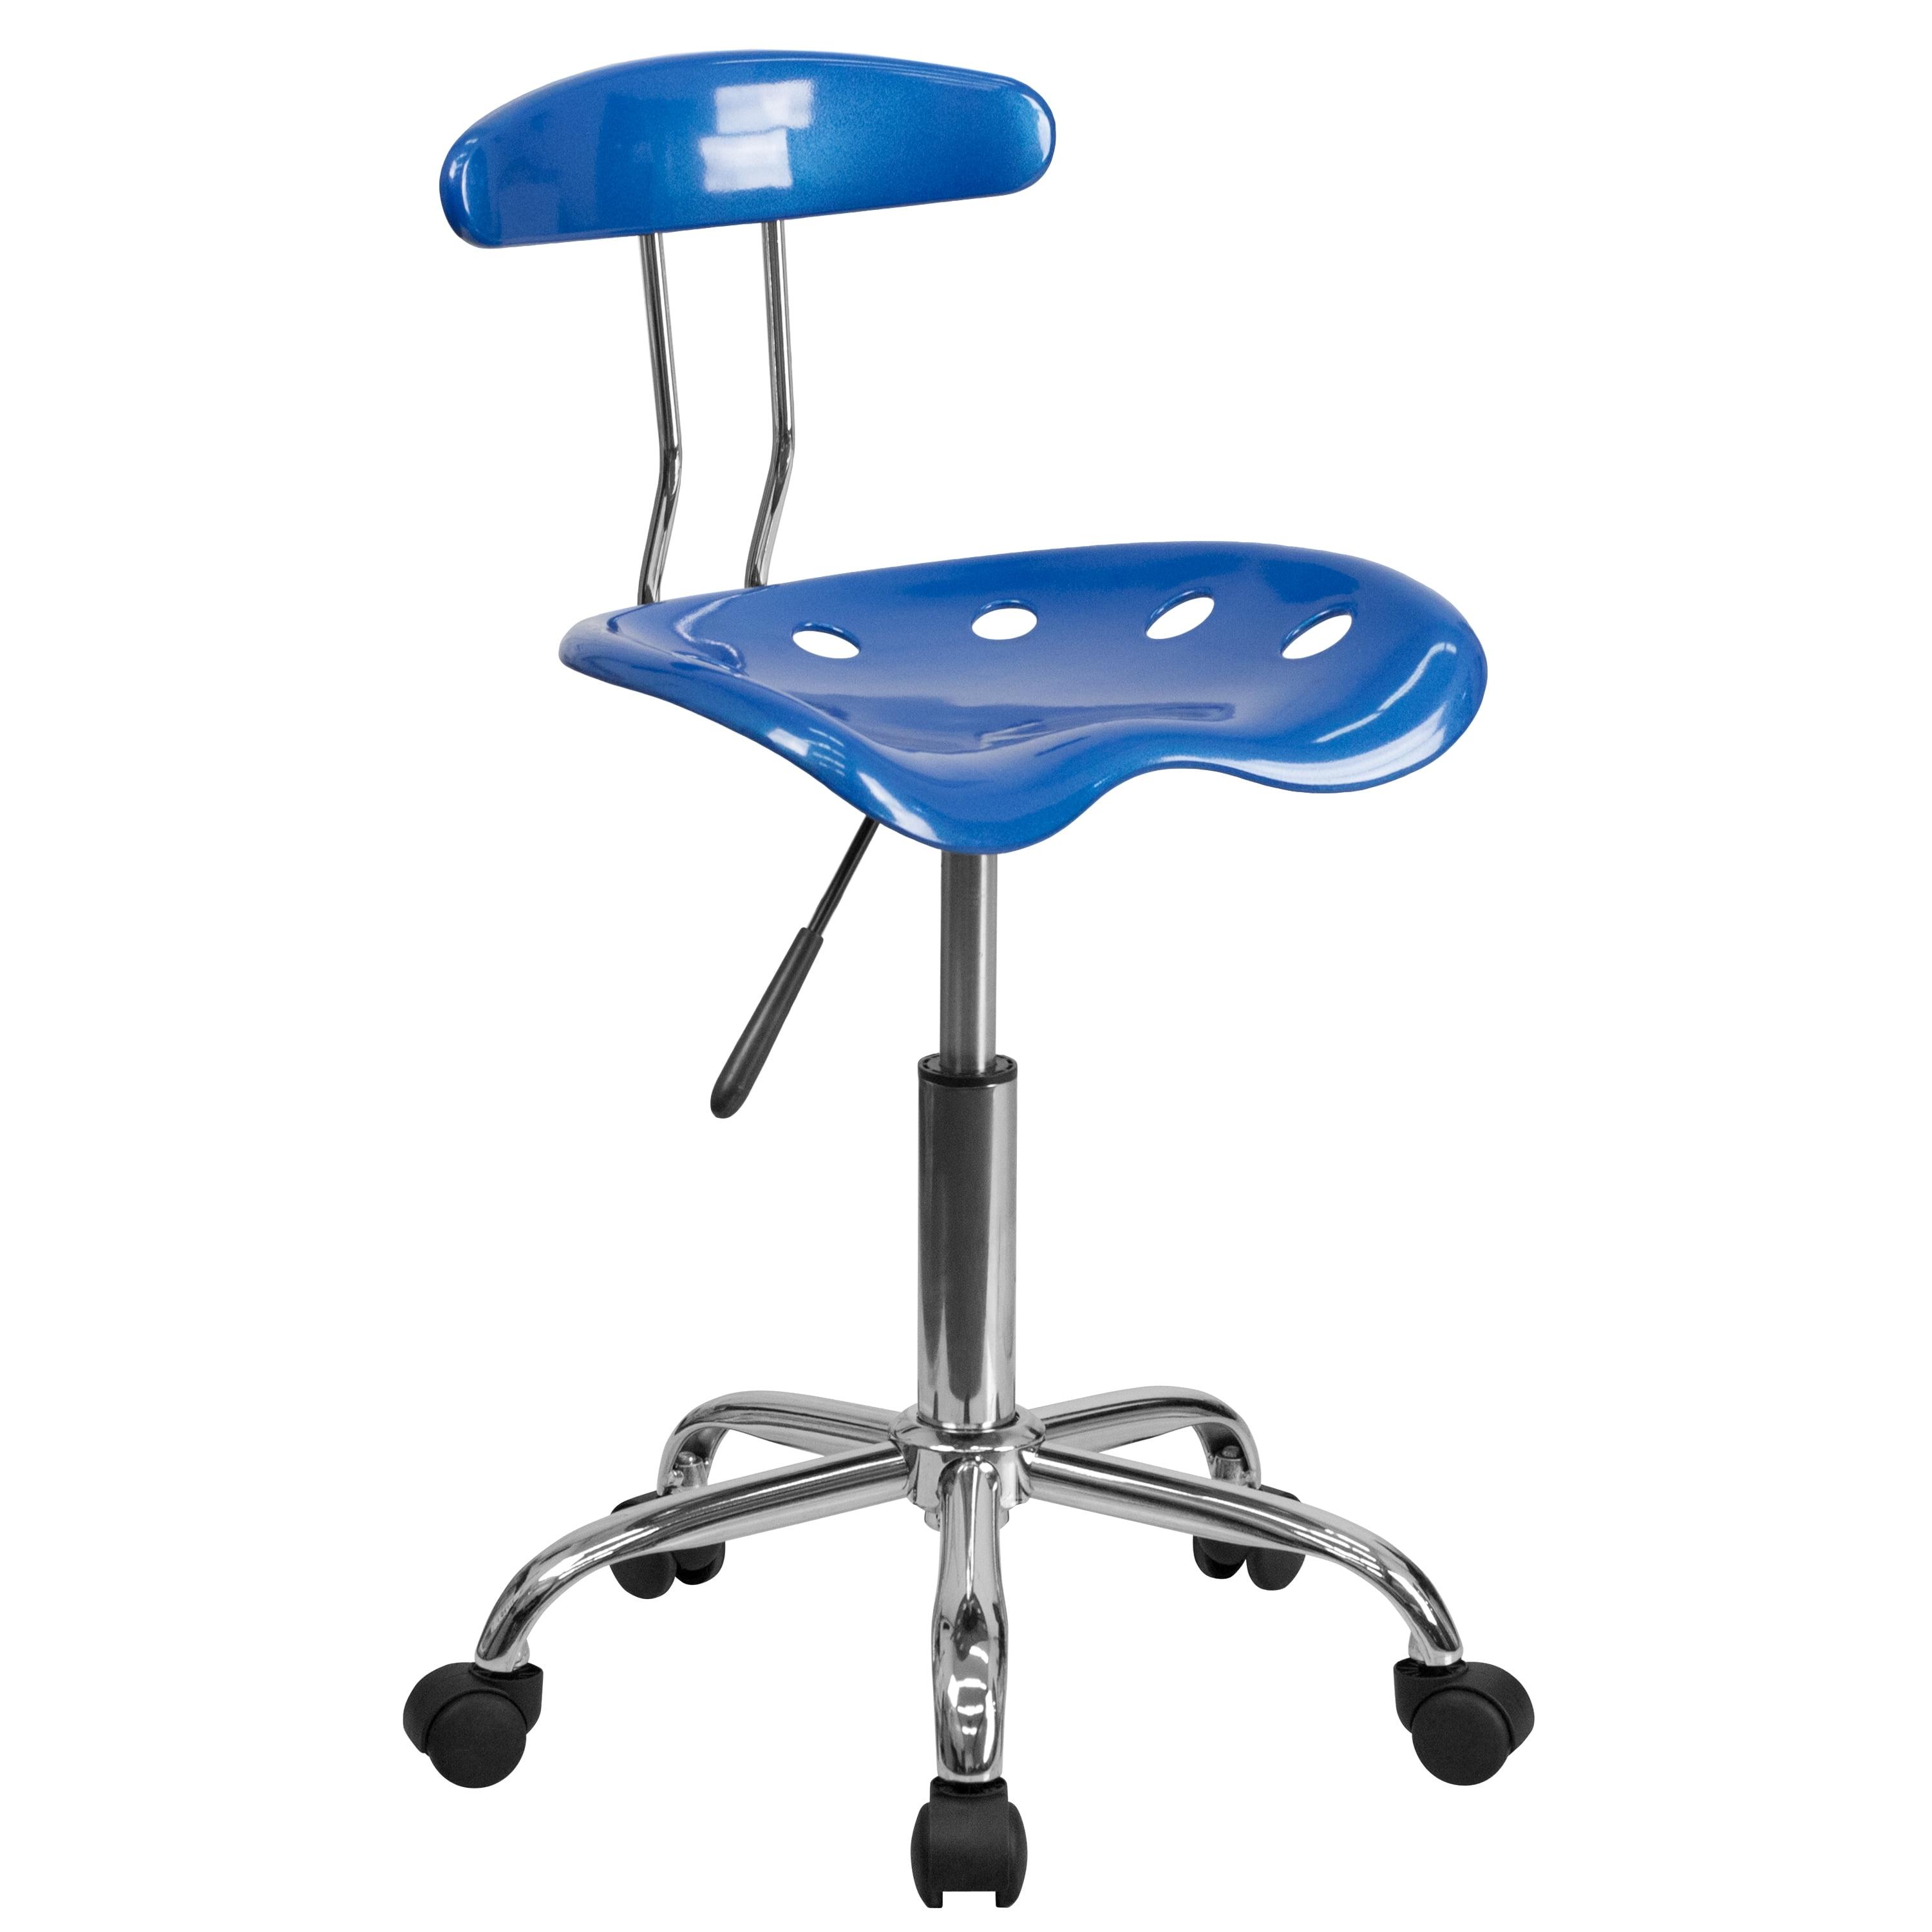 Elliott Vibrant Bright Blue Chrome Swivel Task Chair with Tractor Seat